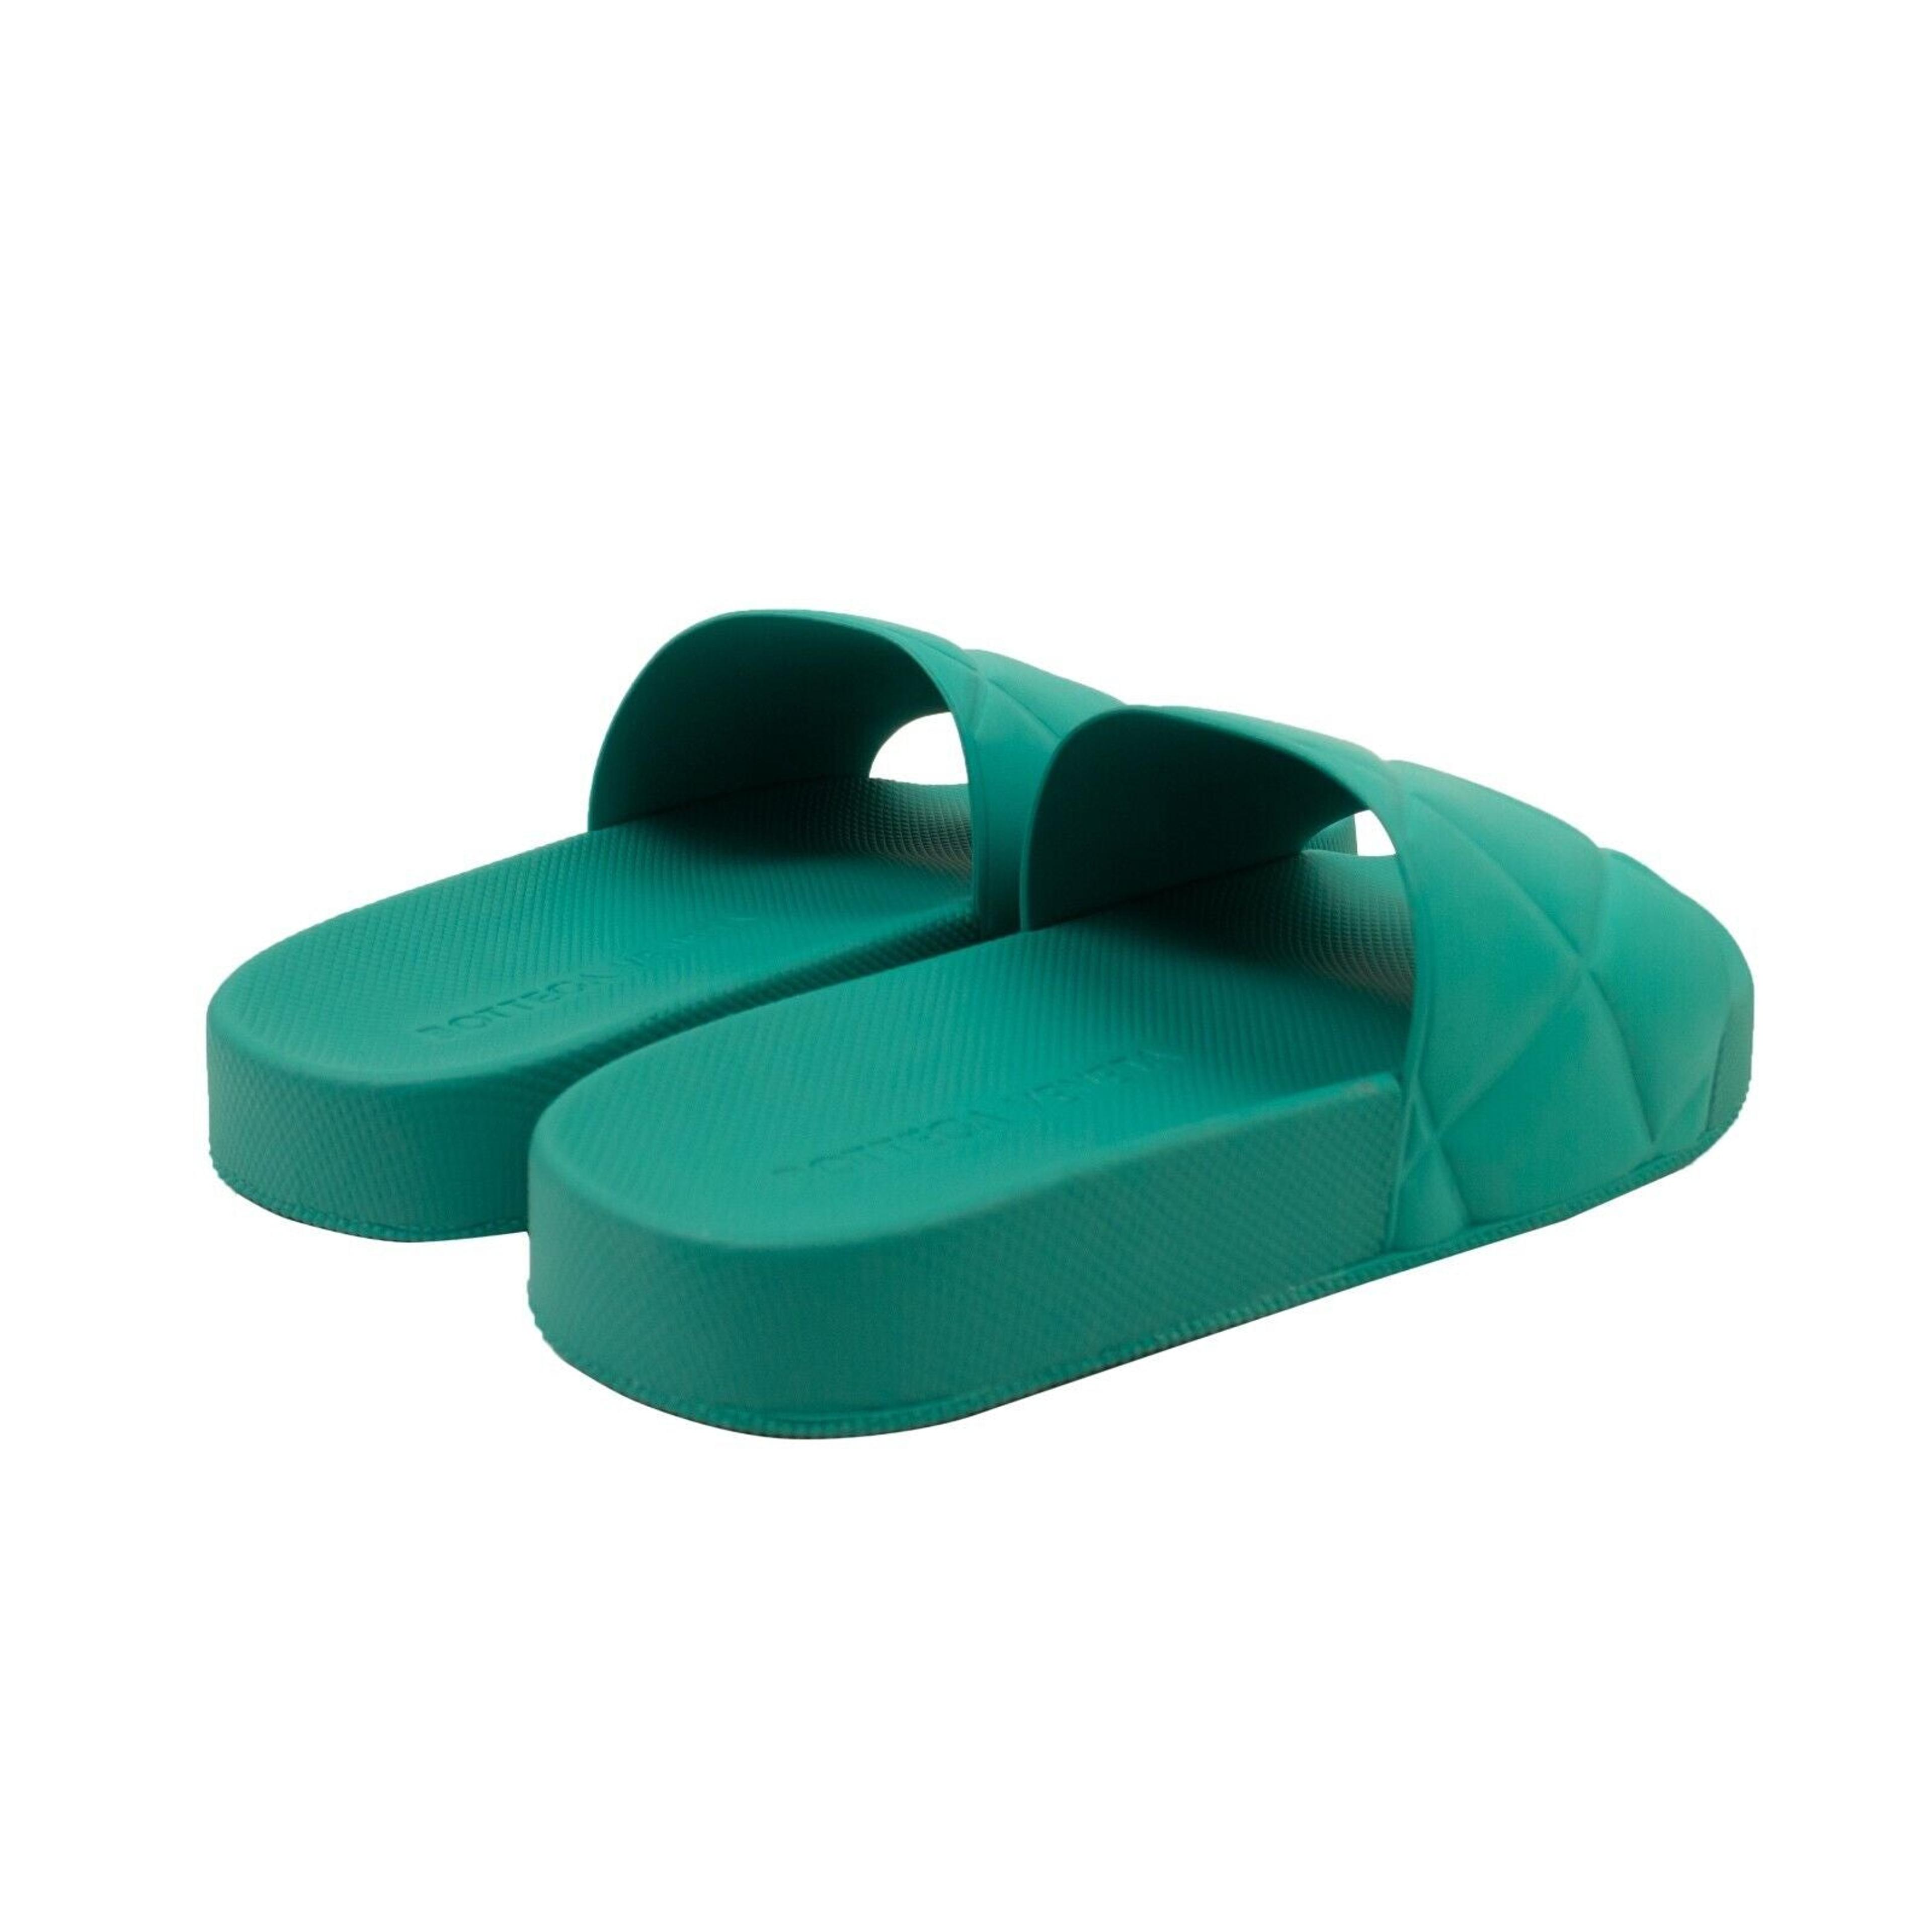 Alternate View 3 of Teal Blue Rubber Slide Sandals